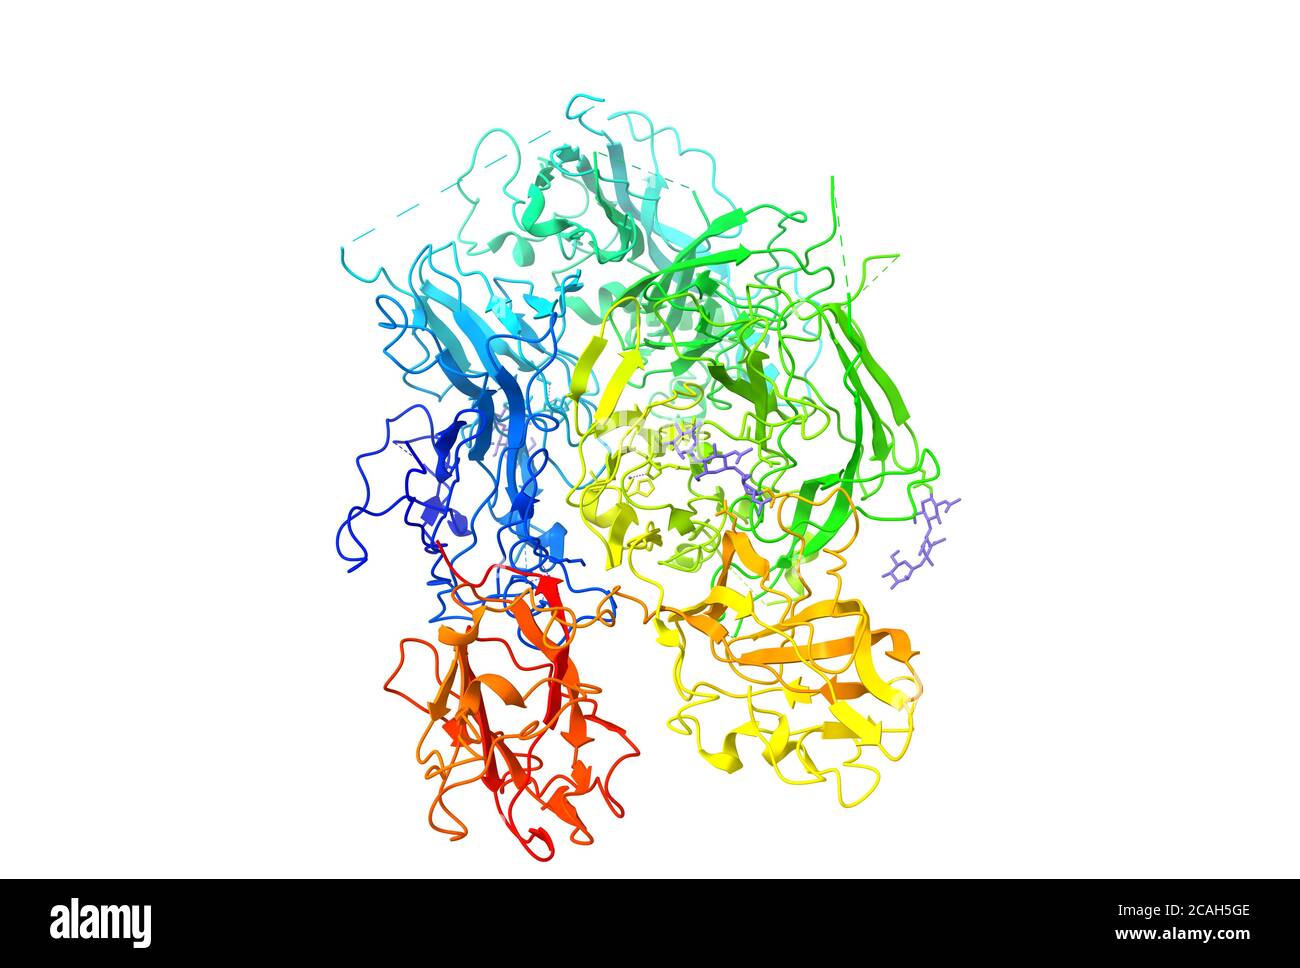 The tertiary structure of Human Coagulation Factor VIII associated with hemophilia A, cartoon model, 3D illustration Stock Photo